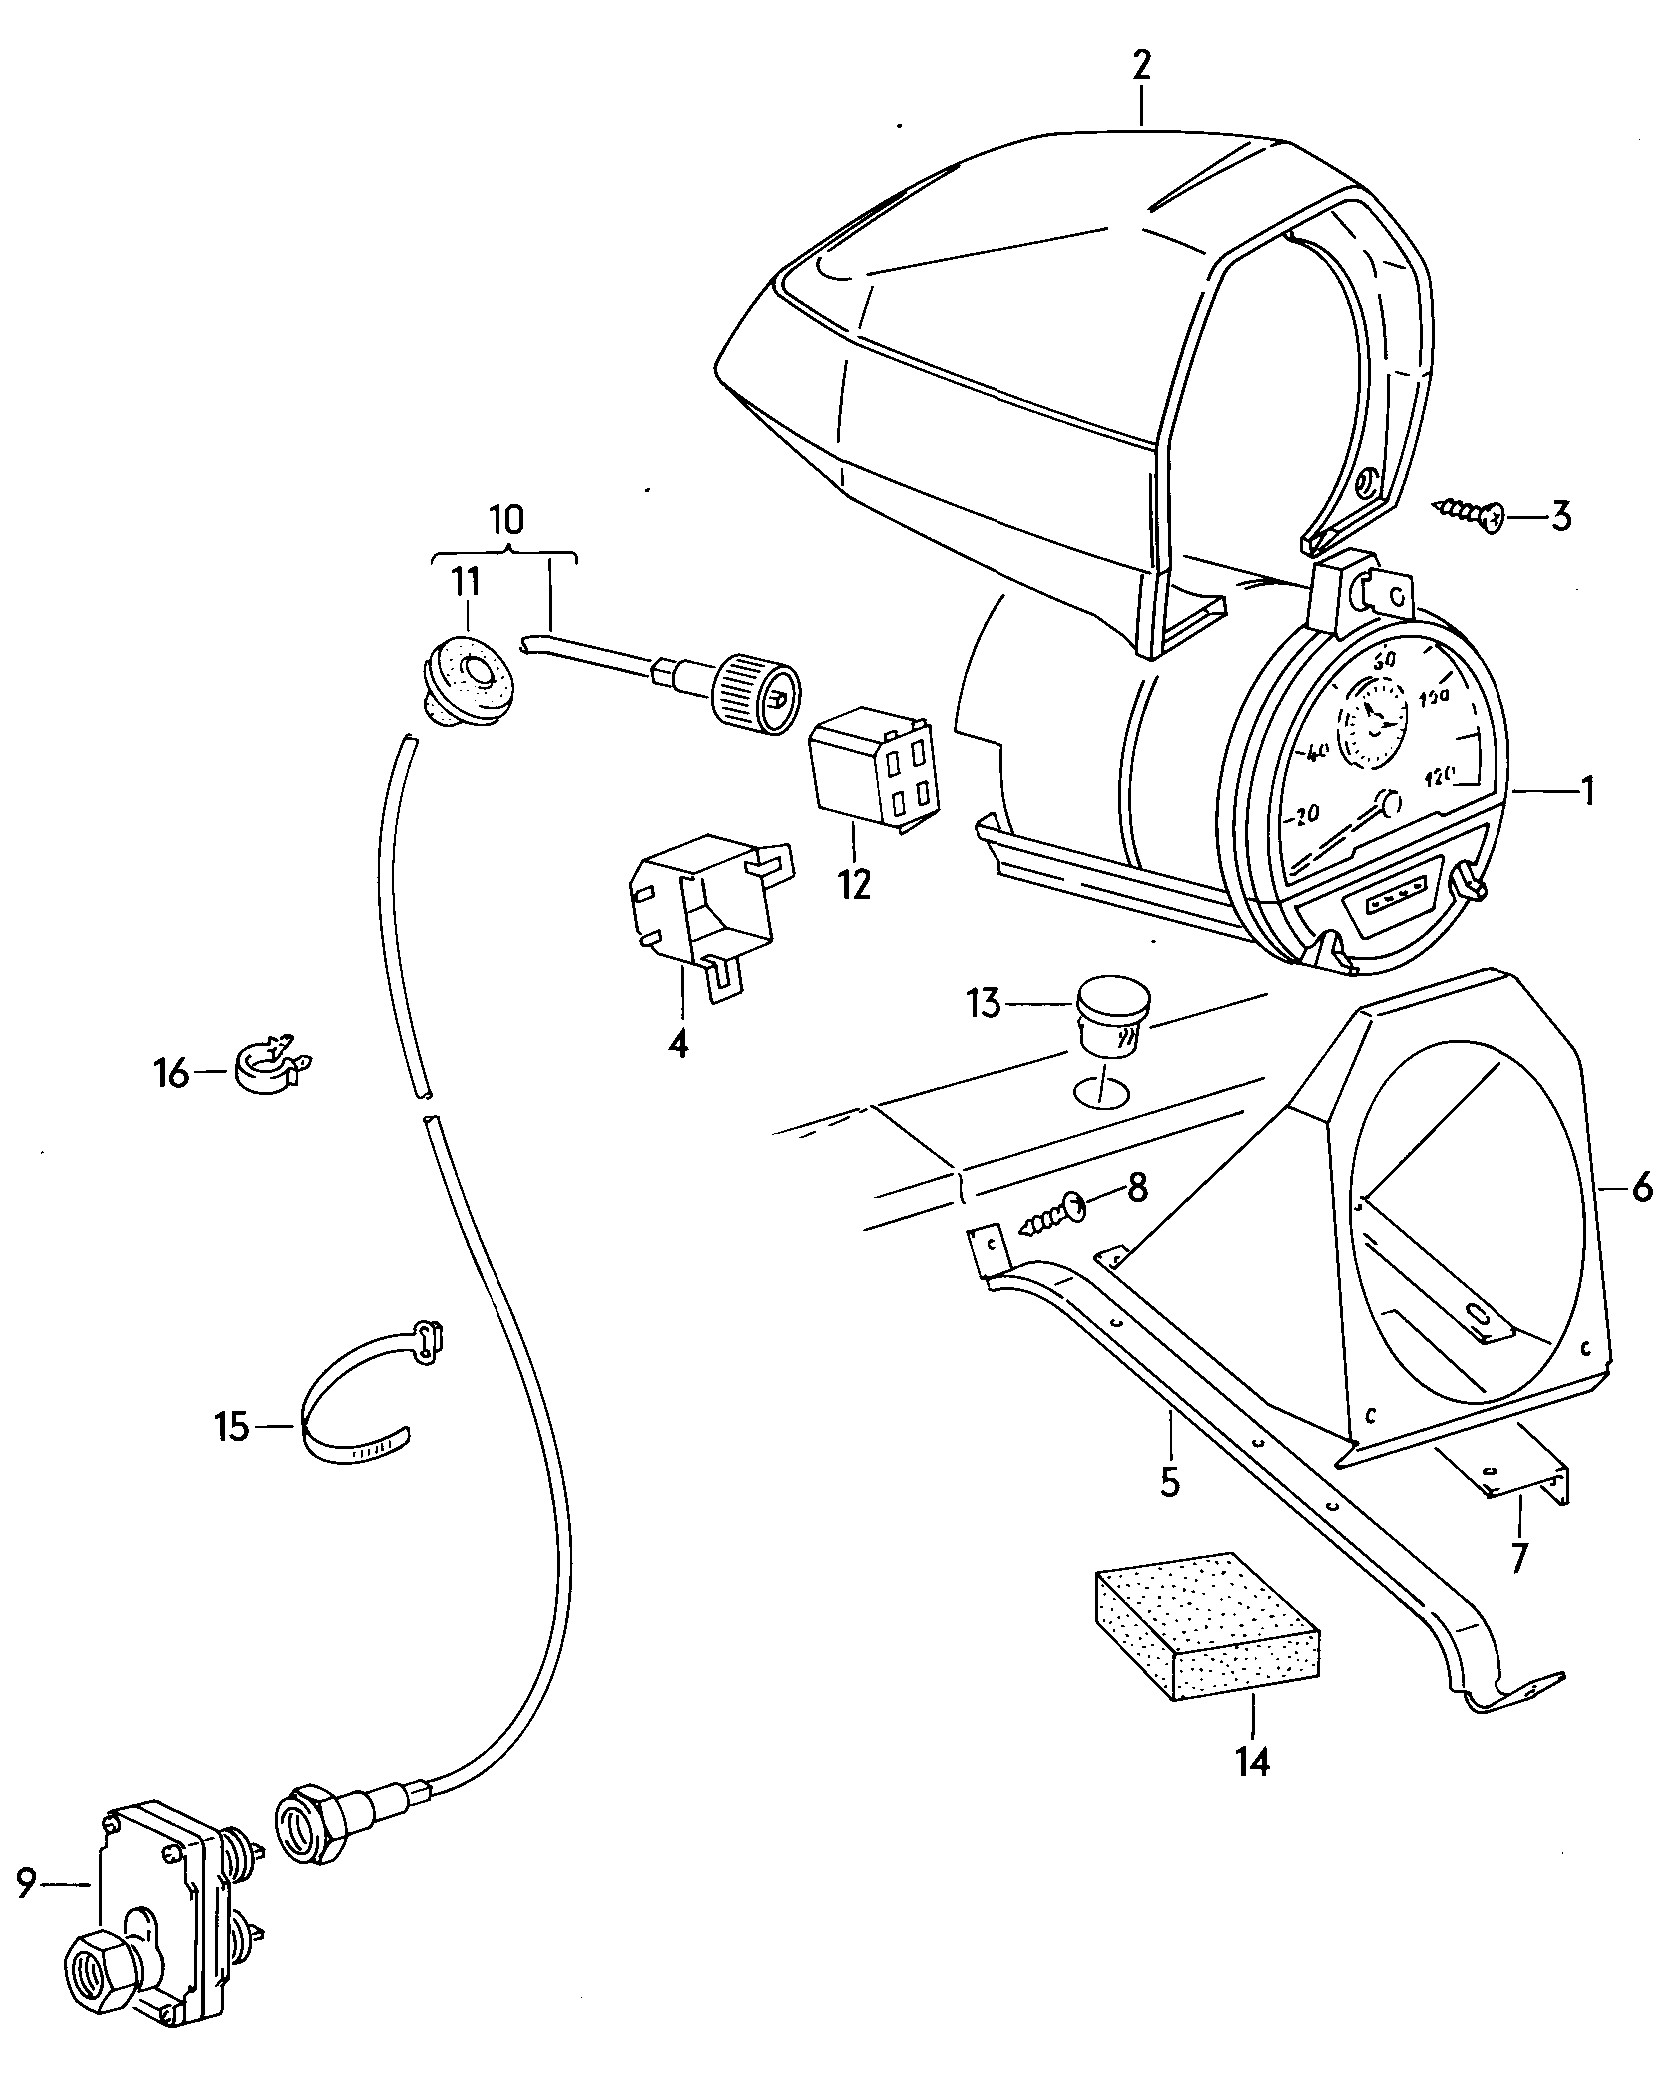 tachograafReductiebakaandrijfas-snelheidsmeter(reductiebak ><br> tachograaf)  - Typ 2/syncro - t2